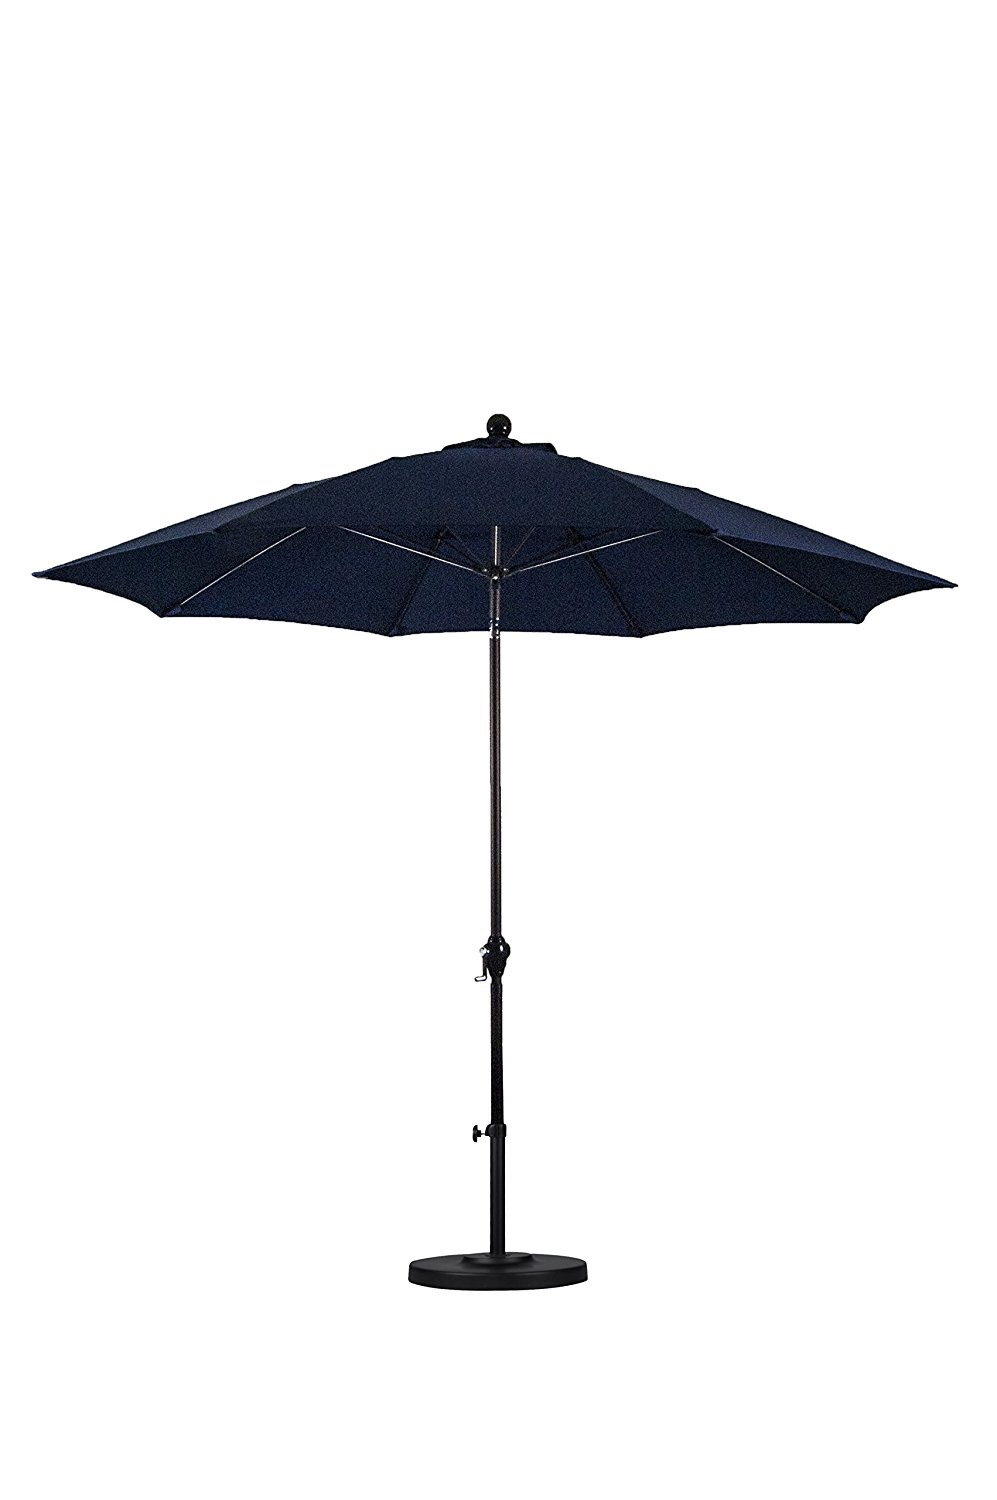 Best Wind Resistant Fiberglass Rib Patio Umbrellas - OutsideModern